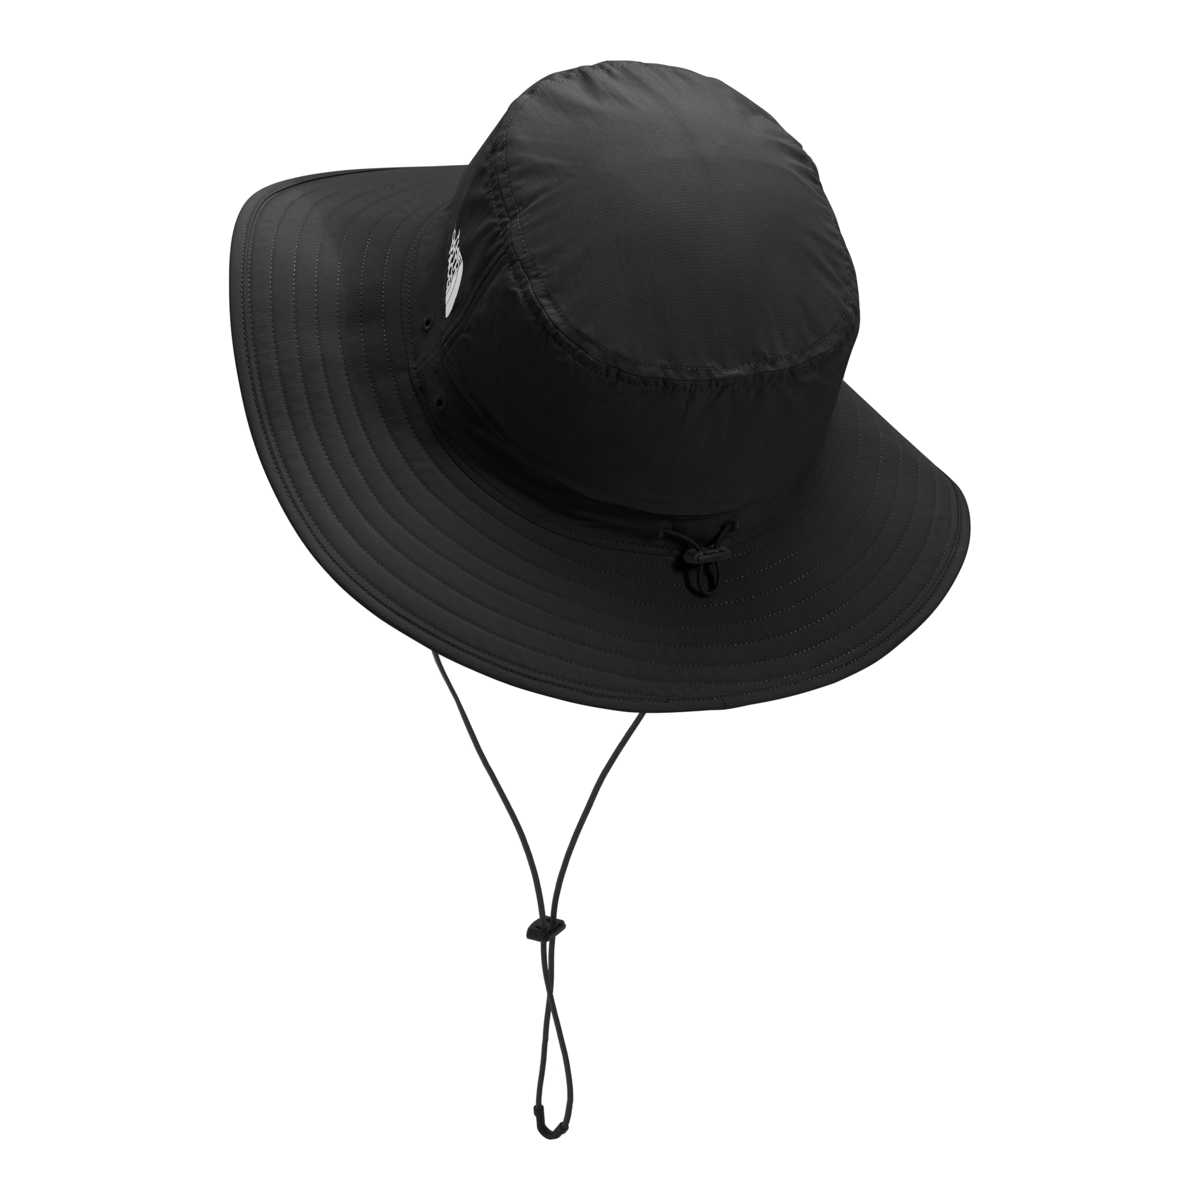 The North Face Horizon Breeze Brimmer Hat Black S/M